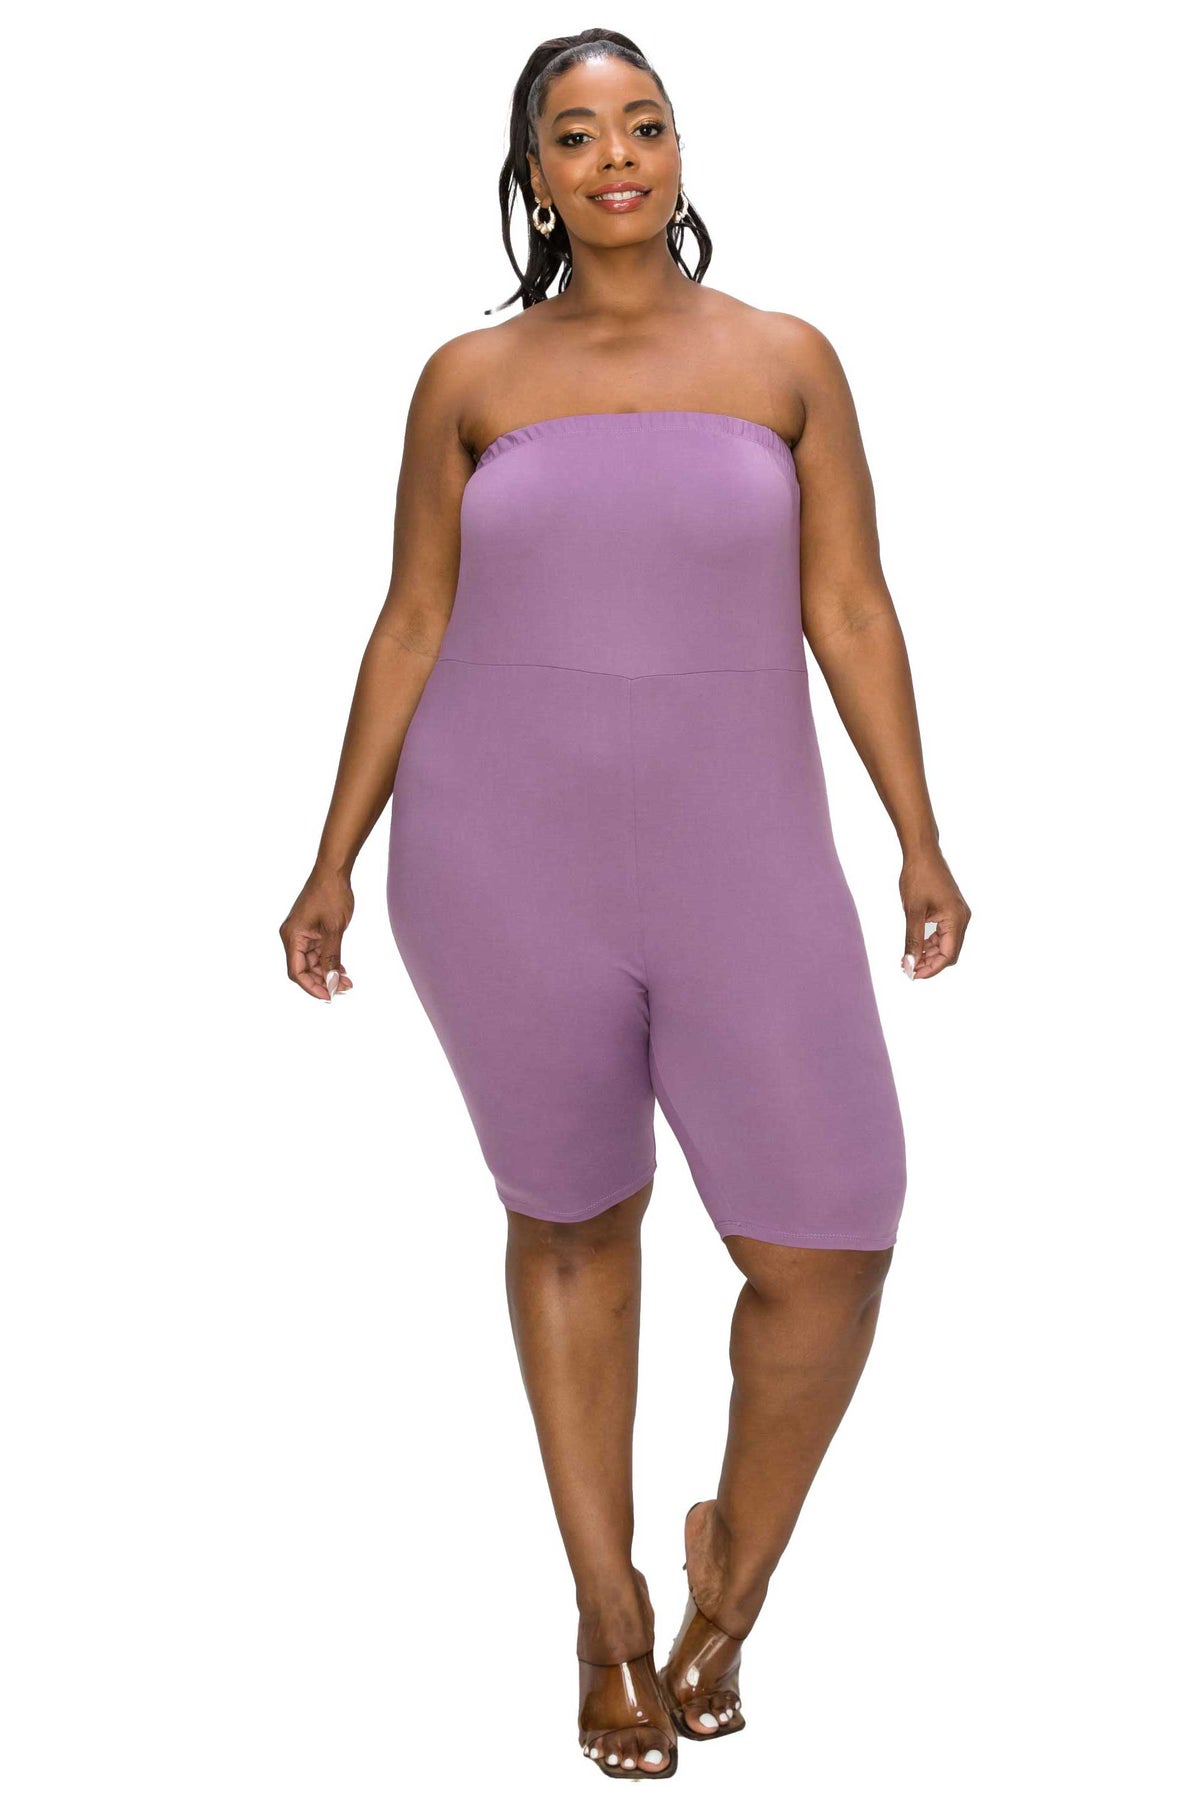 livd L I V D women's plus size boutique bodycon romper in dusty lavender purple